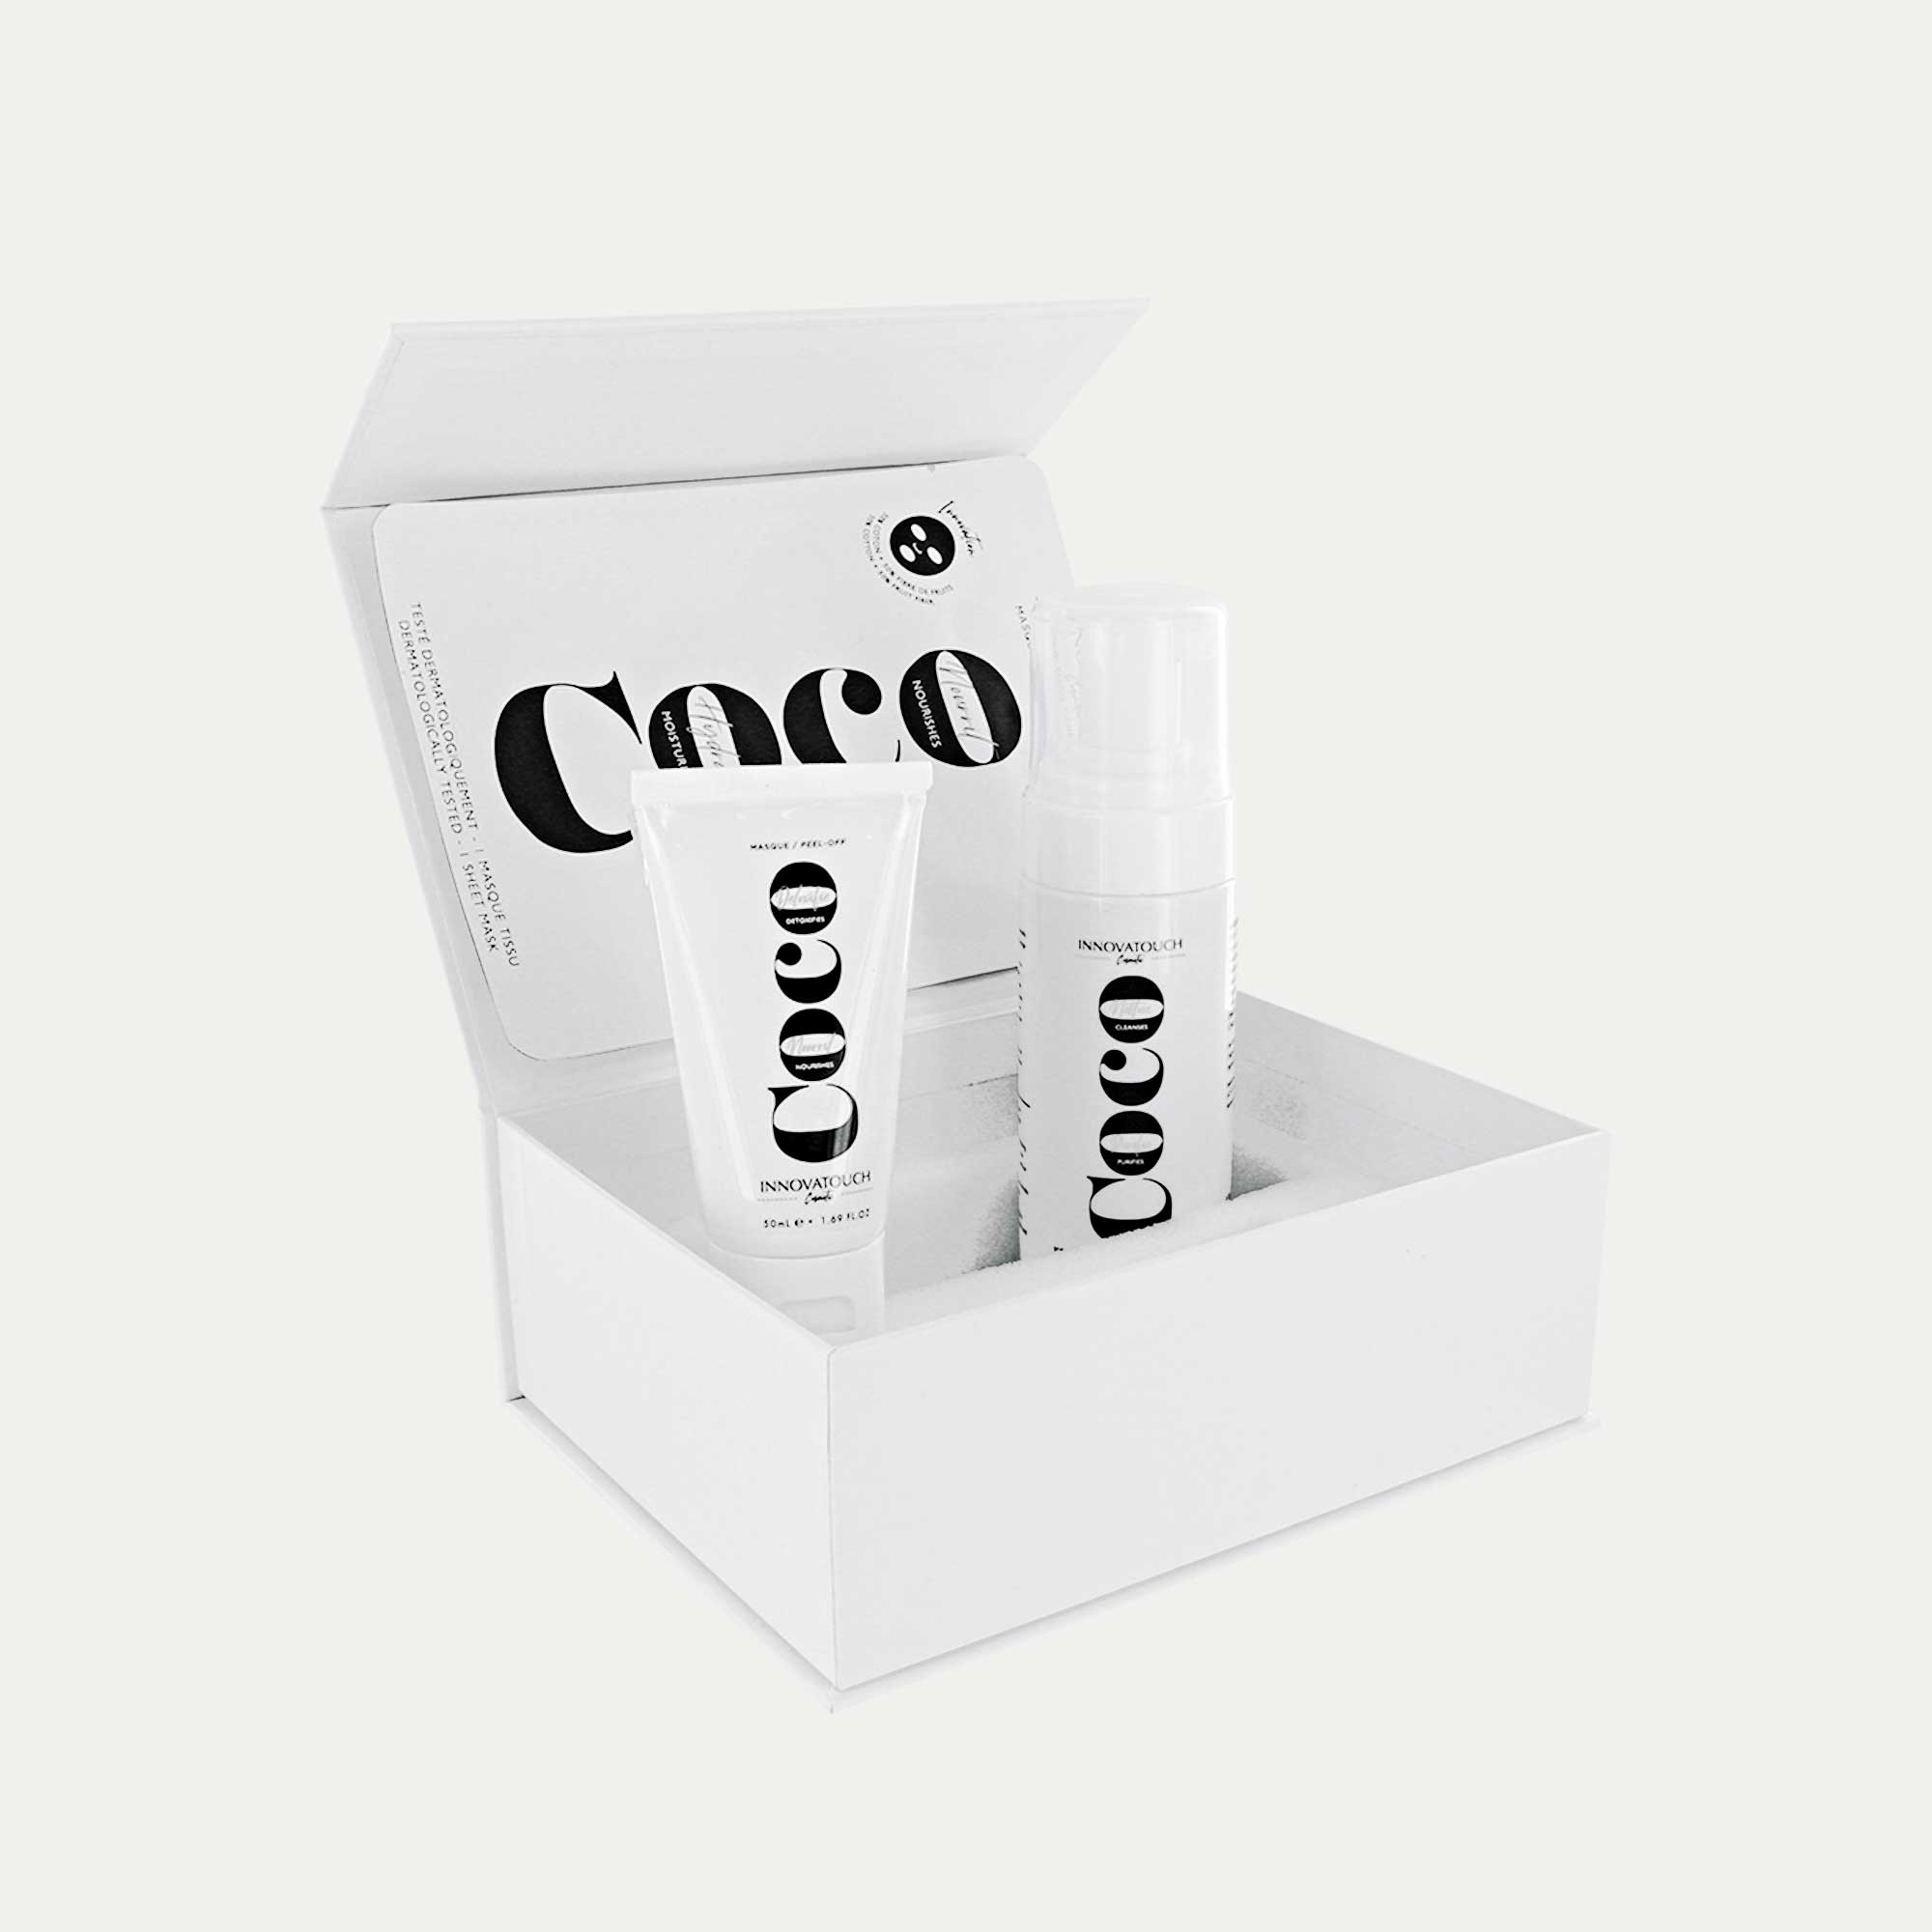 COFFRET-coco-3-cadeaux-innovatouch-cosmetic